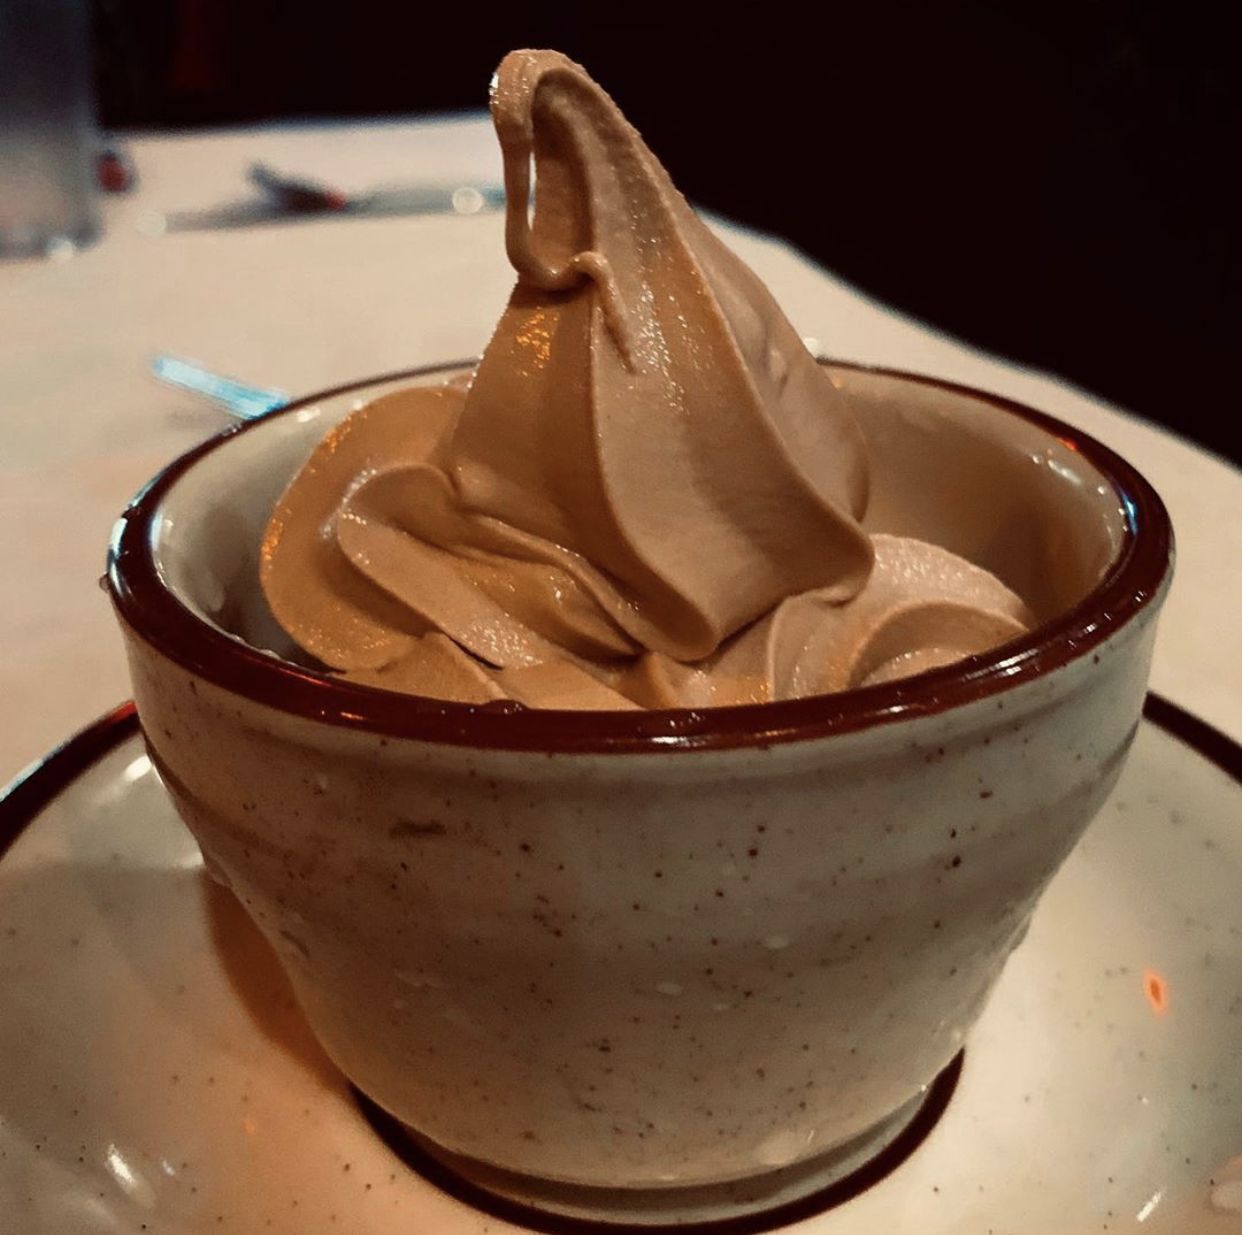 Chocolate Ice Cream - soft serve